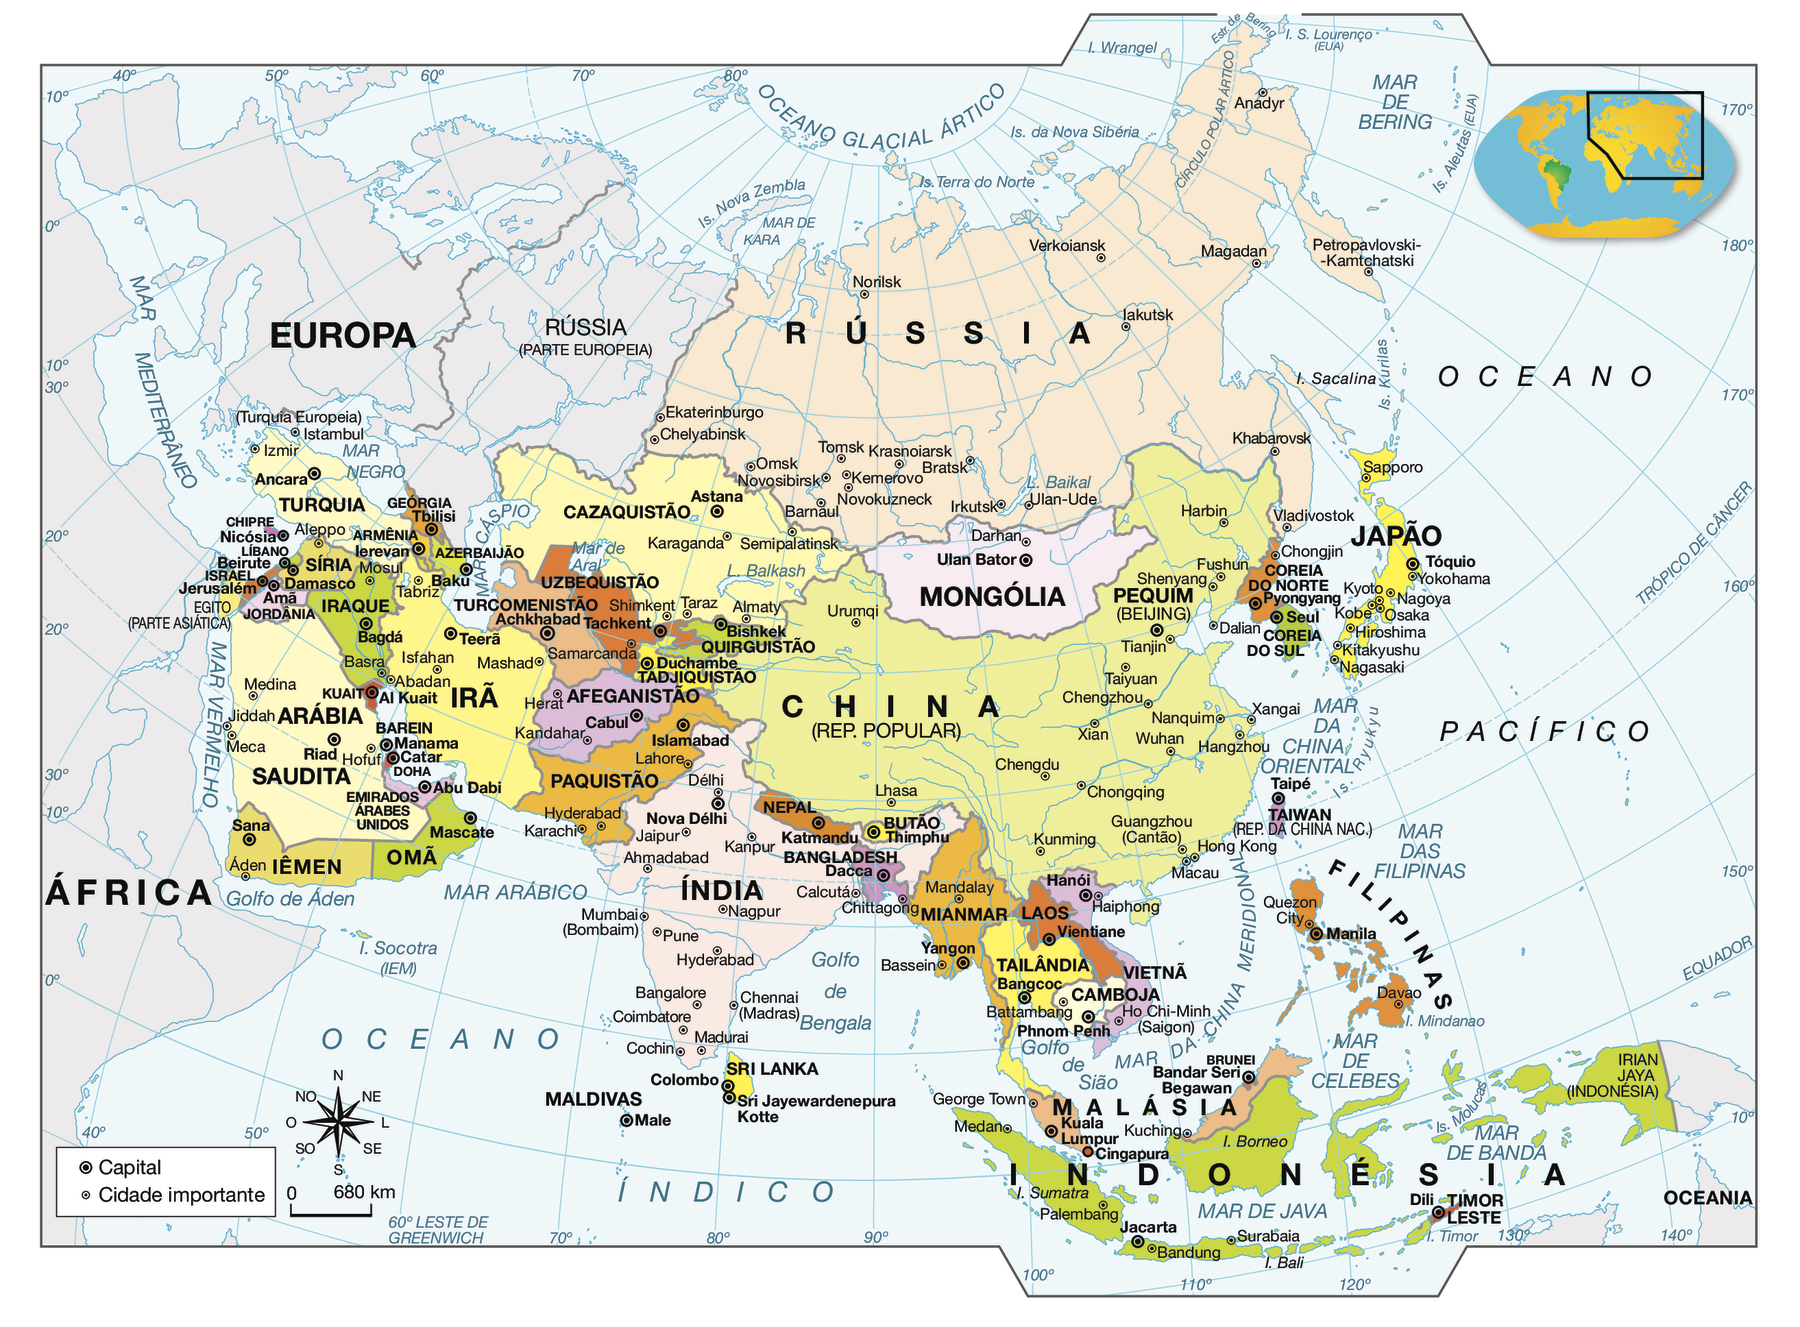 Mapa. Ásia: político. 
O mapa representa os países da Ásia por meio de diferentes cores, além de suas respectivas capitais e cidades importantes. 

País: Rússia (parte asiática). A capital, Moscou, está na parte europeia. Cidades importantes: Ekaterinburgo, Chelyabinsk, Omsk, Novosibirsk, Barnaul, Novokuzneck, Kemerovo, Tomsk, Krasnoiarsk, Bratsk, Irkutsk, Ulan-Ude, Khabarovsk, Vladivostok, Iakutsk, Norilsk, Verkoiansk, Magadan, Anadyr e Petropavlovski-Kamtcharski.
País: Mongólia. Capital: Ulan Bator. Cidade importante: Darhan.
País: República Popular da China. Capital: Pequim (ou Beijing). Cidades importantes: Harbin, Fushun, Shenyang, Dalian, Tianjin, Taiyuan, Chengzhou, Nanquim, Xangai, Hangzhou, Xian, Wuhan, Chengdu, Chongqing, Guangzhou (ou Cantão), Hong Kong, Macau, Kunming, Lhasa e Urumqi.
País: Coreia do Norte. Capital: Pyongyang. Cidade importante: Chongjin. 
País: Coreia do Sul. Capital: Seul.
País: Japão. Capital: Tóquio. Cidades importantes: Sapporo, Yokohama, Nagoya, Osaka, Hiroshima, Kitakyushu, Nagasaki, Kobe e Kyoto.
País: Taiwan (ou República da China Nacionalista). Capital: Taipé.
País: Filipinas. Capital: Manila. Cidades importantes: Quezon City e Davao.
País: Malásia. Capital: Kuala Lumpur. Cidades importantes: George Town e Kuching.
País: Brunei. Capital: Bandar Seri Begawan.
País e capital: Cingapura (a cidade é o território do país). 
País: Indonésia. Capital: Jacarta. Cidades importantes: Medan, Palembang, Bandung e Surabaia.
País: Timor Leste. Capital: Dili.
País: Vietnã. Capital: Hanói. Cidades importantes: Haiphong e Ho Chi-Minh (ou Saigon).
País: Camboja. Capital: Phnom Penh. Cidade importante: Battambang.
País: Tailândia. Capital: Bangcoc.
País: Laos. Capital: Vientiane.
País: Mianmar. Capital: Yangon. Cidades importantes: Mandalay e Bassein.
País: Bangladesh. Capital: Dacca. Cidade importante: Chittagong.
País: Nepal. Capital: Katmandu.
País: Butão. Capital: Thimphu.
País: Índia. Capital: Nova Délhi. Cidades importantes: Délhi, Jaipur, Kanpur, Ahmadabad, Calcutá, Nagpur, Mumbai (ou Bombaim), Pune, Hyderabad, Bangalore, Chennai (ou Madras), Coimbatore, Cochin e Madurai. 
País: Sri Lanka. Capitais: Colombo e Sri Jayewardenepura Kotte.
País: Maldivas. Capital: Male.
País: Paquistão. Capital: Islamabad. Cidades importantes: Lahore, Hyderabad e Karachi.
País: Afeganistão. Capital: Cabul. Cidades importantes: Herat e Kandahar.
País: Tadjiquistão. Capital: Duchambe.
País: Quirguistão. Capital: Bishkek.
País: Uzbequistão. Capital: Tachkent. Cidade importante: Samarcanda.
País: Cazaquistão. Capital: Astana. Cidades importantes: Semipalatinsk, Karaganda, Shimkent, Taraz e Almaty.
País: Turcomenistão. Capital: Achkhabad.
País: Irã. Capital: Teerã. Cidades importantes: Mashad, Isfahan, Abadan e Tabriz.
País: Iraque. Capital: Bagdá. Cidades importantes: Mosul e Basra.
País: Turquia. Capital: Ancara. Cidades importantes: Istambul (na Turquia europeia) e Izmir.
País: Chipre. Capital: Nicósia.
País: Geórgia. Capital: Tbilisi.
País: Armênia. Capital: Ierevan.
País: Azerbaijão. Capital: Baku.
País: Síria. Capital: Damasco. Cidade importante: Aleppo.
País: Líbano. Capital: Beirute.
País: Israel. Capital: Jerusalém.
País: Jordânia. Capital: Amã.
País: Kuait. Capital: Al Kuait.
País: Barein. Capital: Manama.
País: Arábia Saudita. Capital: Riad. Cidades importantes: Medina, Jiddah, Meca e Hofuf.
País: Catar. Capital: Doha.
País: Emirados Árabes Unidos. Capital: Abu Dabi.
País: Iêmen. Capital: Sana. Cidade importante: Áden.
País: Omã. Capital: Mascate.

Além do continente asiático, o mapa mostra a Europa e o norte da África e uma pequena parte da Oceania.

Na parte inferior esquerda, a rosa dos ventos e a escala de 0 a 680 quilômetros.